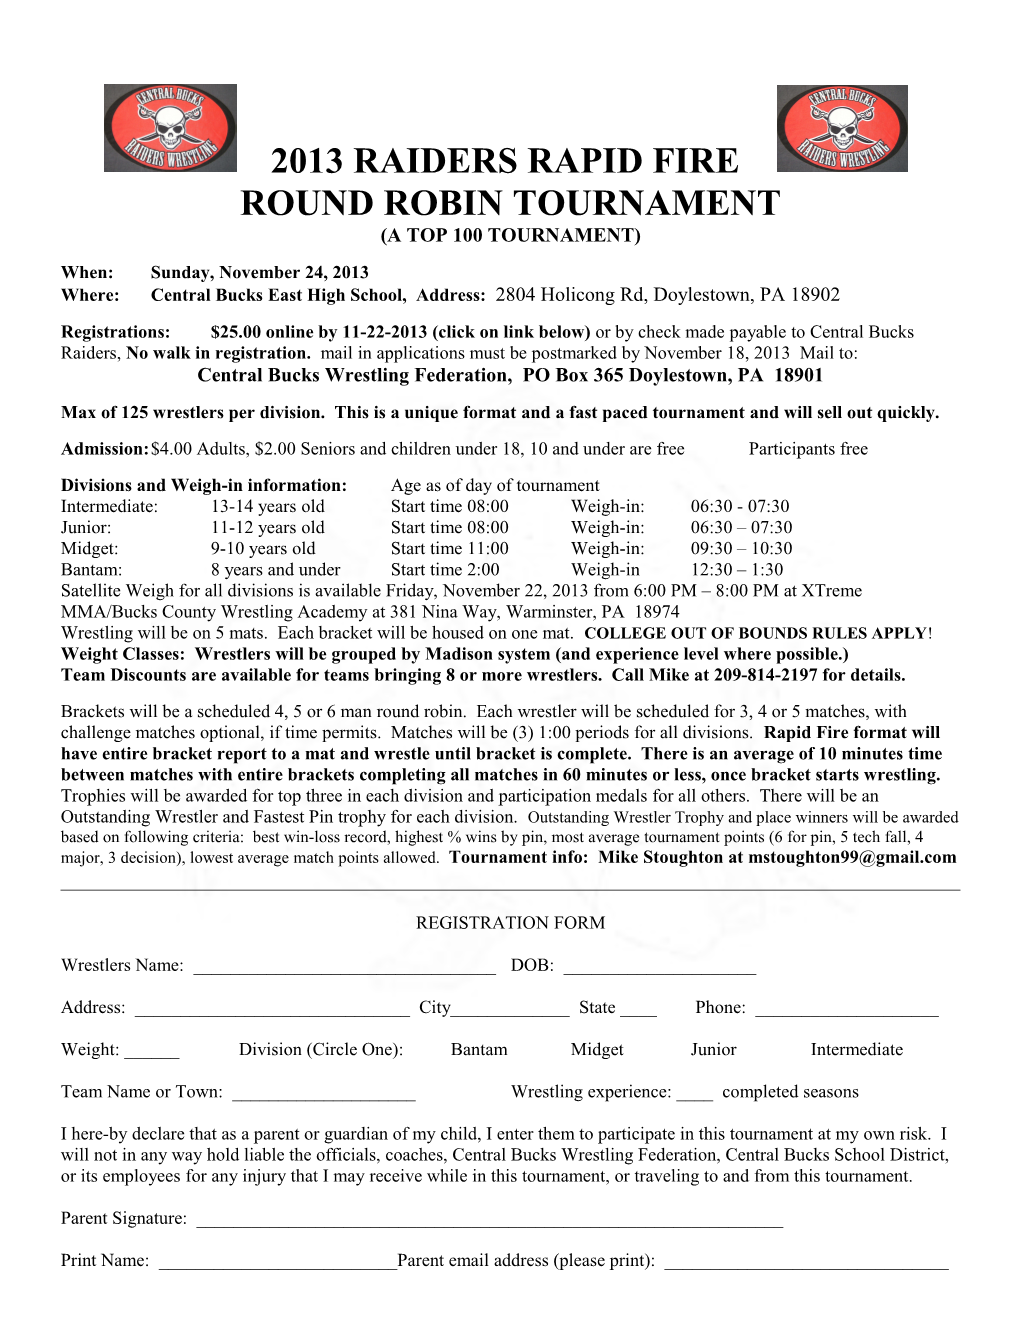 Round Robin Tournament